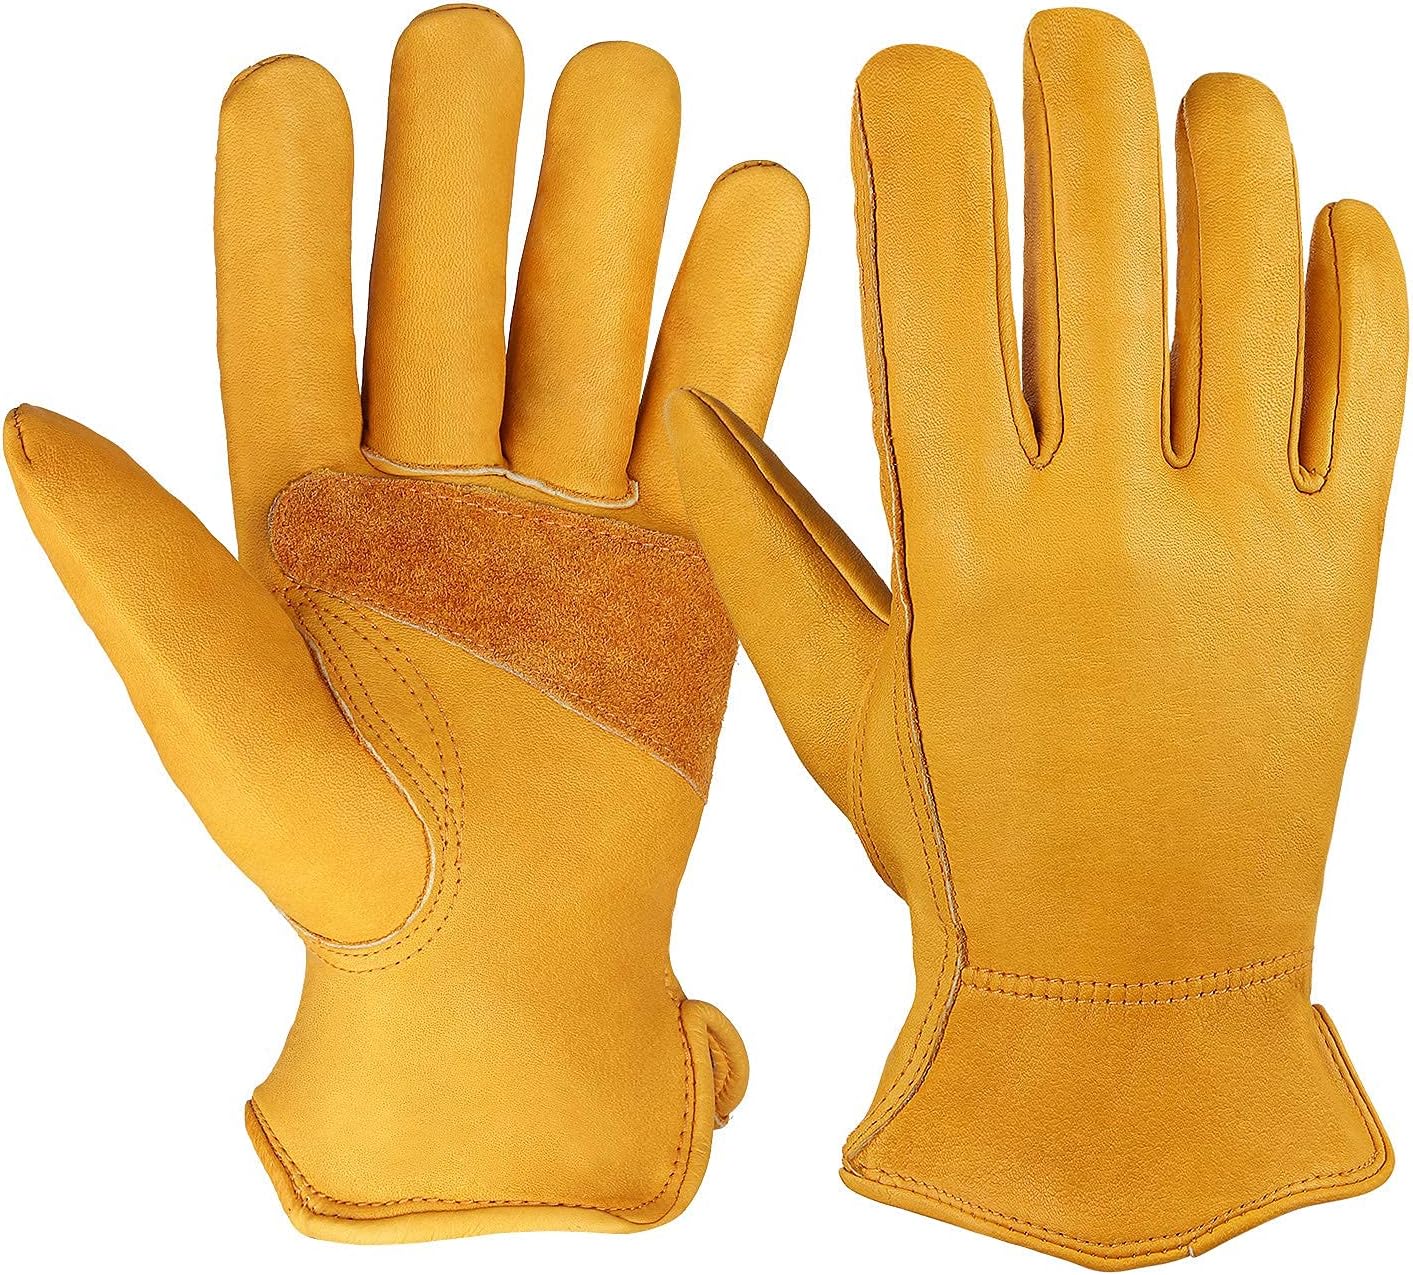 OZERO Flex Grip Leather Work Gloves Stretchable Wrist [...]